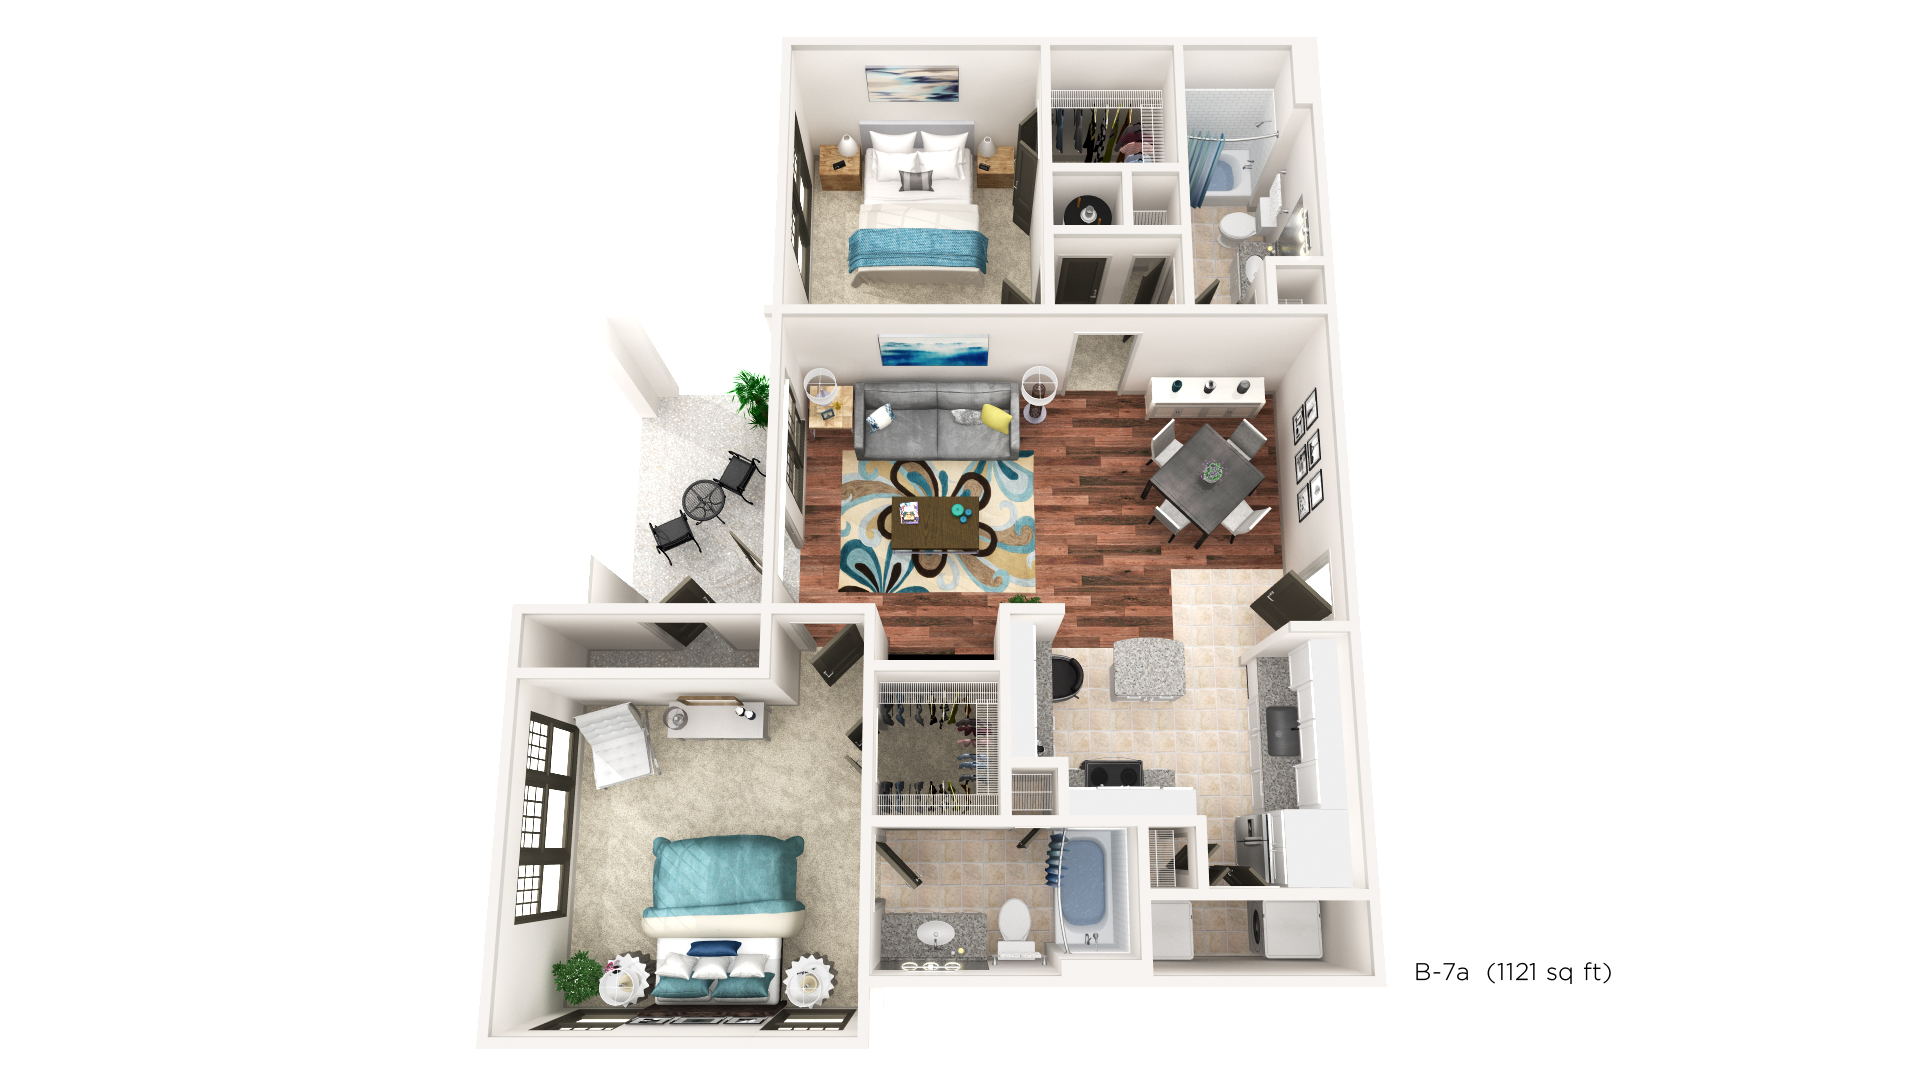 Brookleigh Flats Luxury Apartment Homes - Floorplan - B-7A